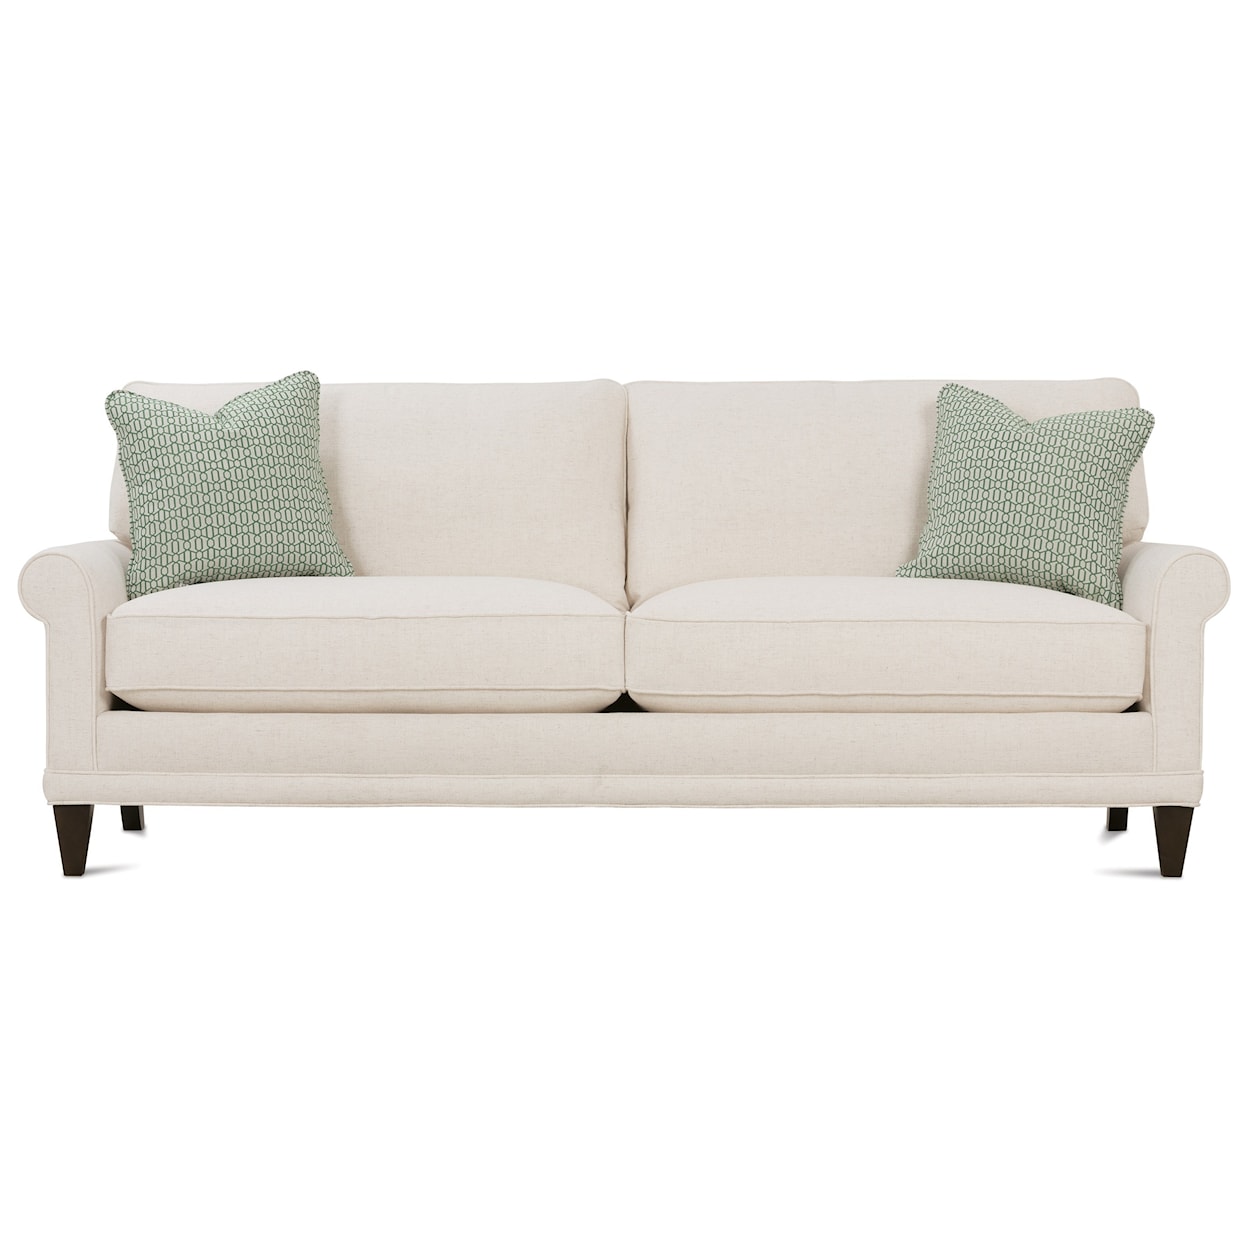 Rowe My Style II Customizable Sofa